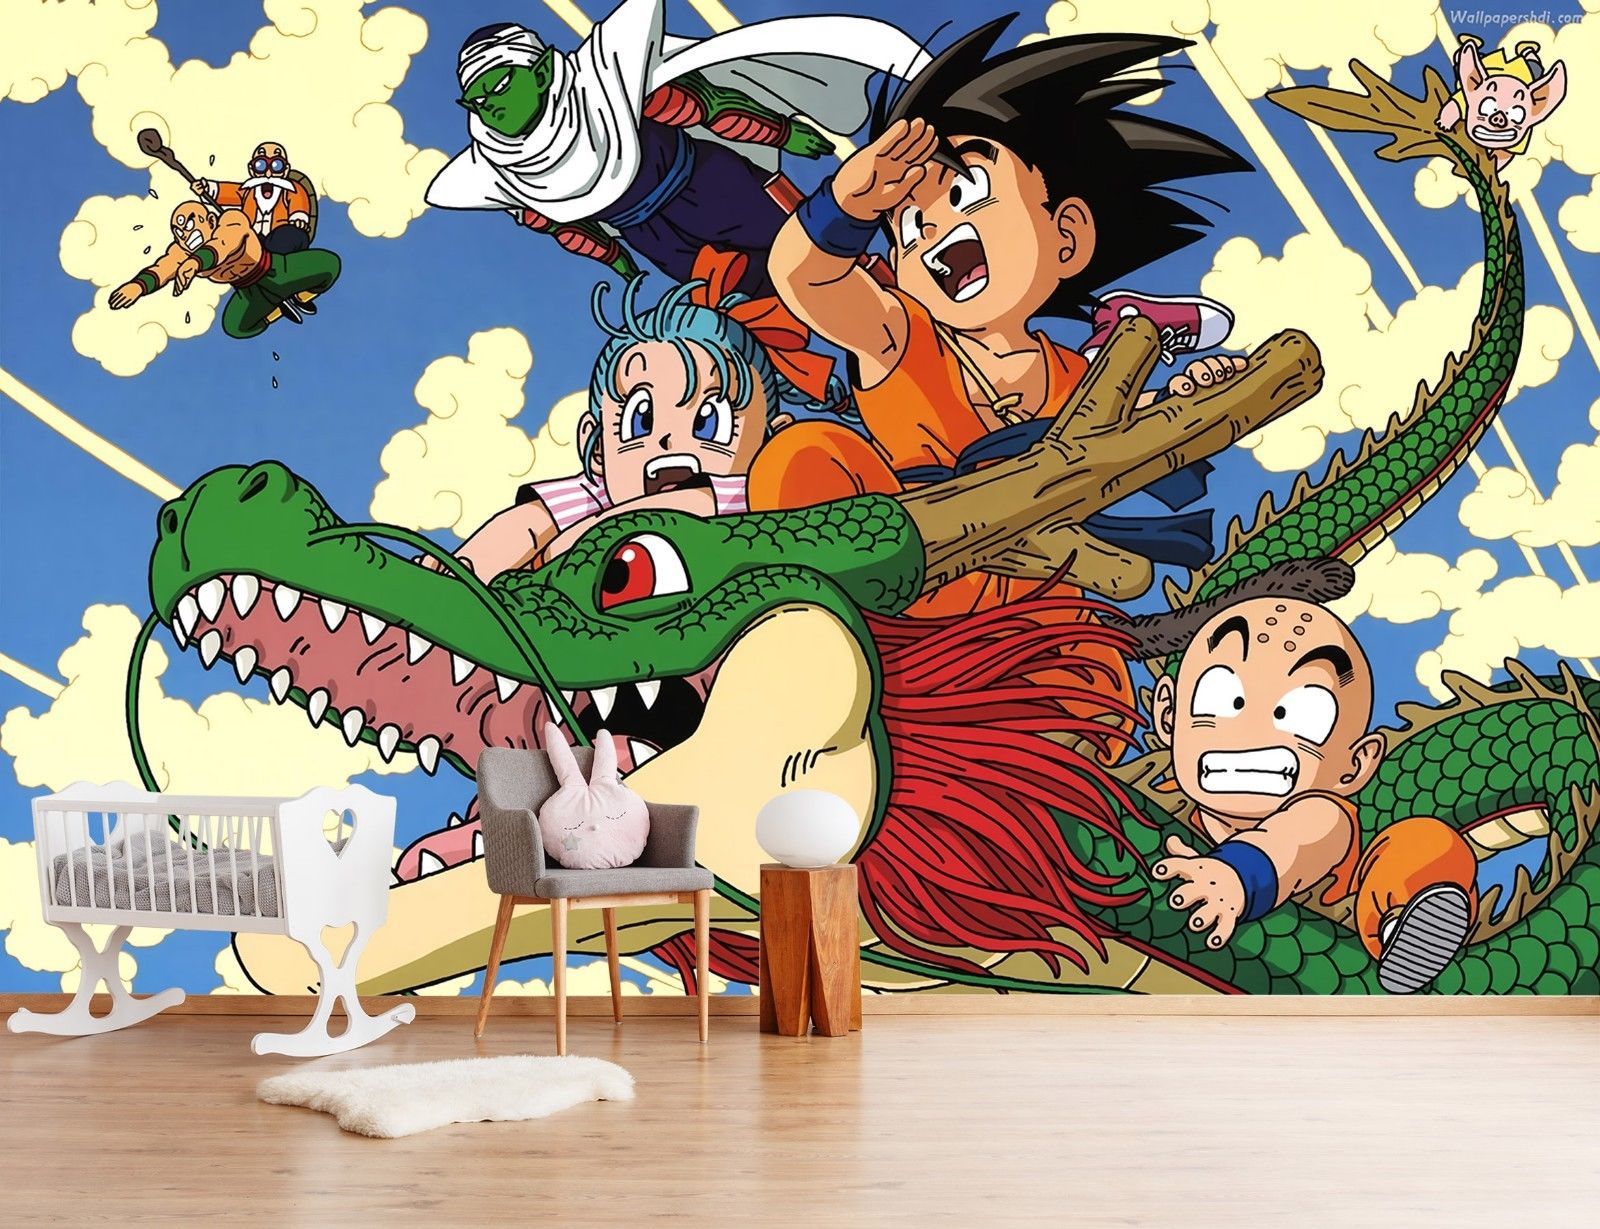 3d Dragon Boy 1 Japan Anime Game Wallpaper Mural Poster Cartoon Decal